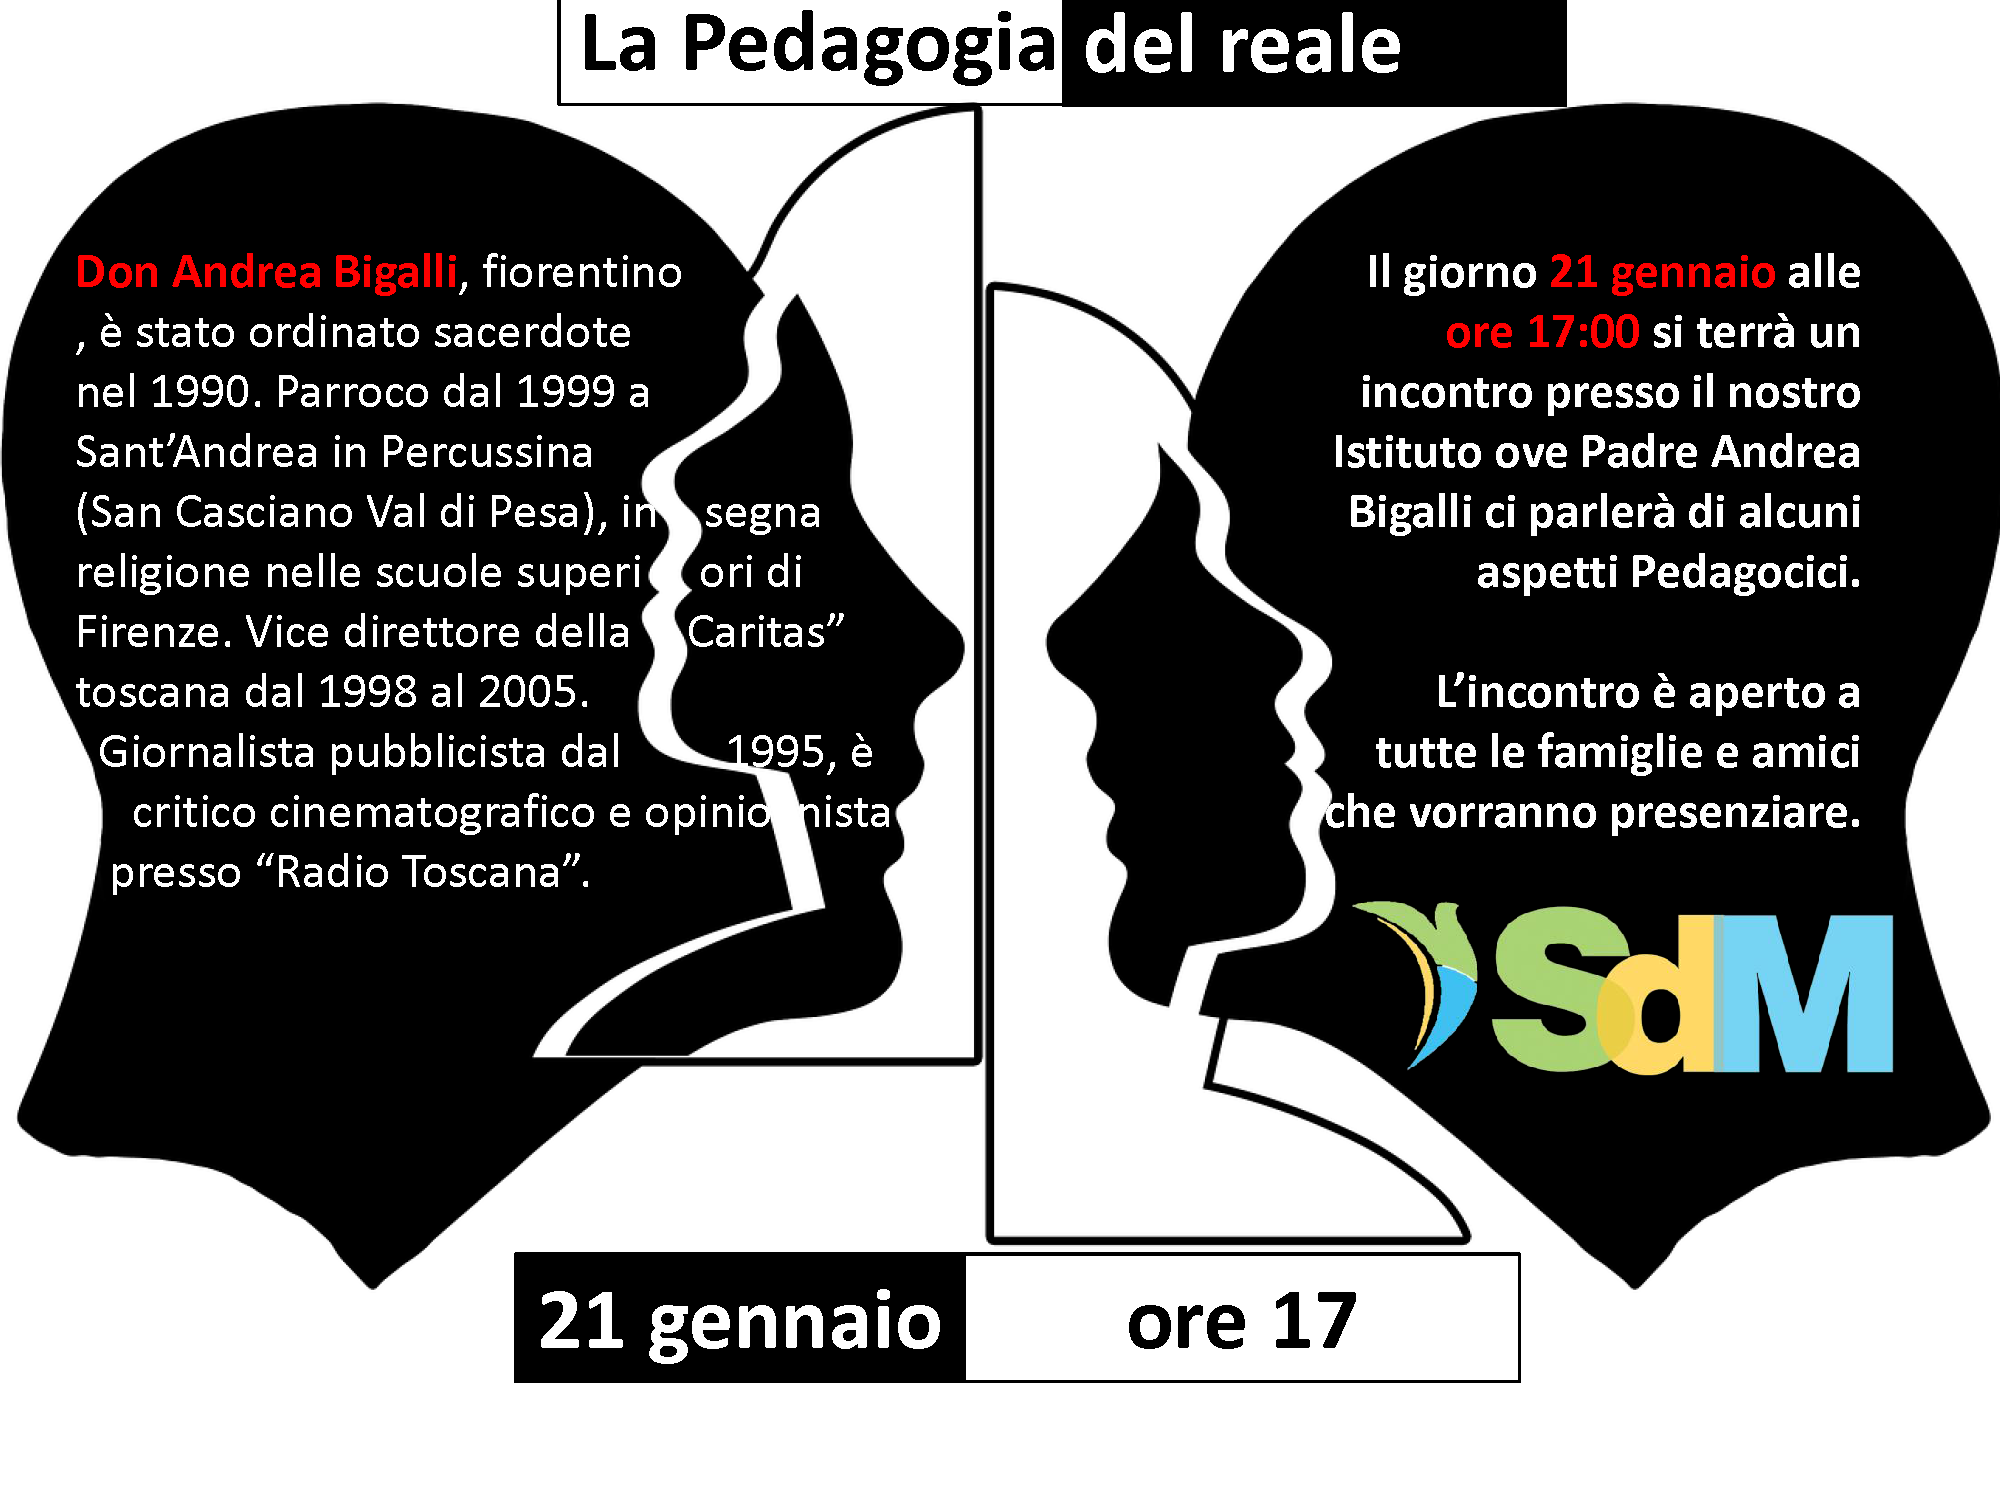 SDM_informativa_Don_Andrea_pedagogia_reale.png